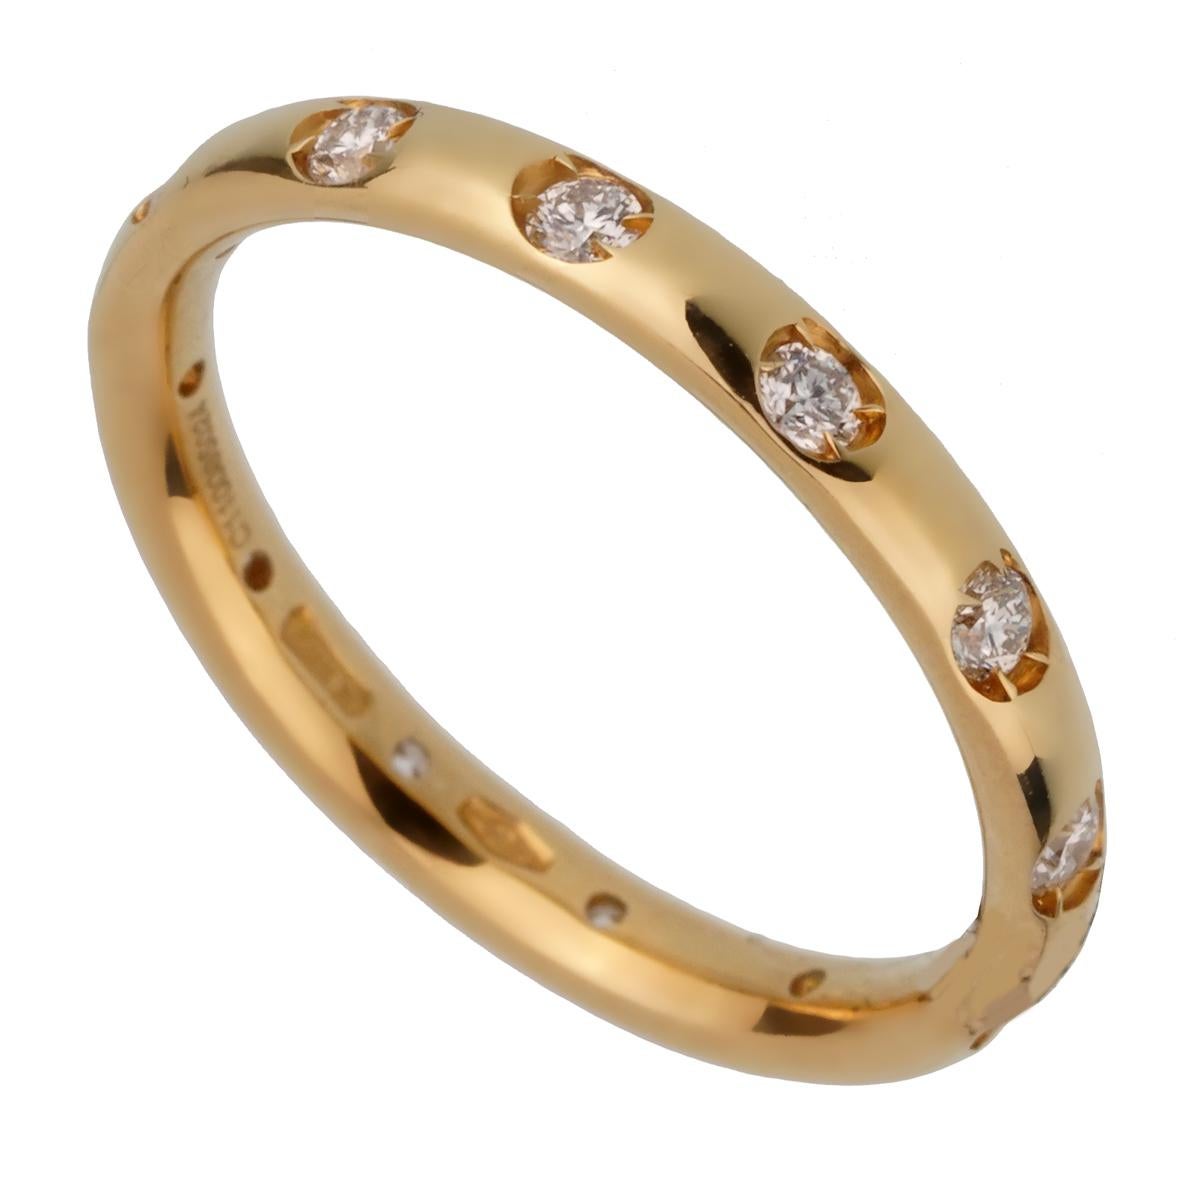 A chic brand new Pomellato diamond ring adorned with round brilliant cut diamonds in 18k yellow gold. The ring measures a size 5

Pomellato Retail Price: $2500
Sku: 2339